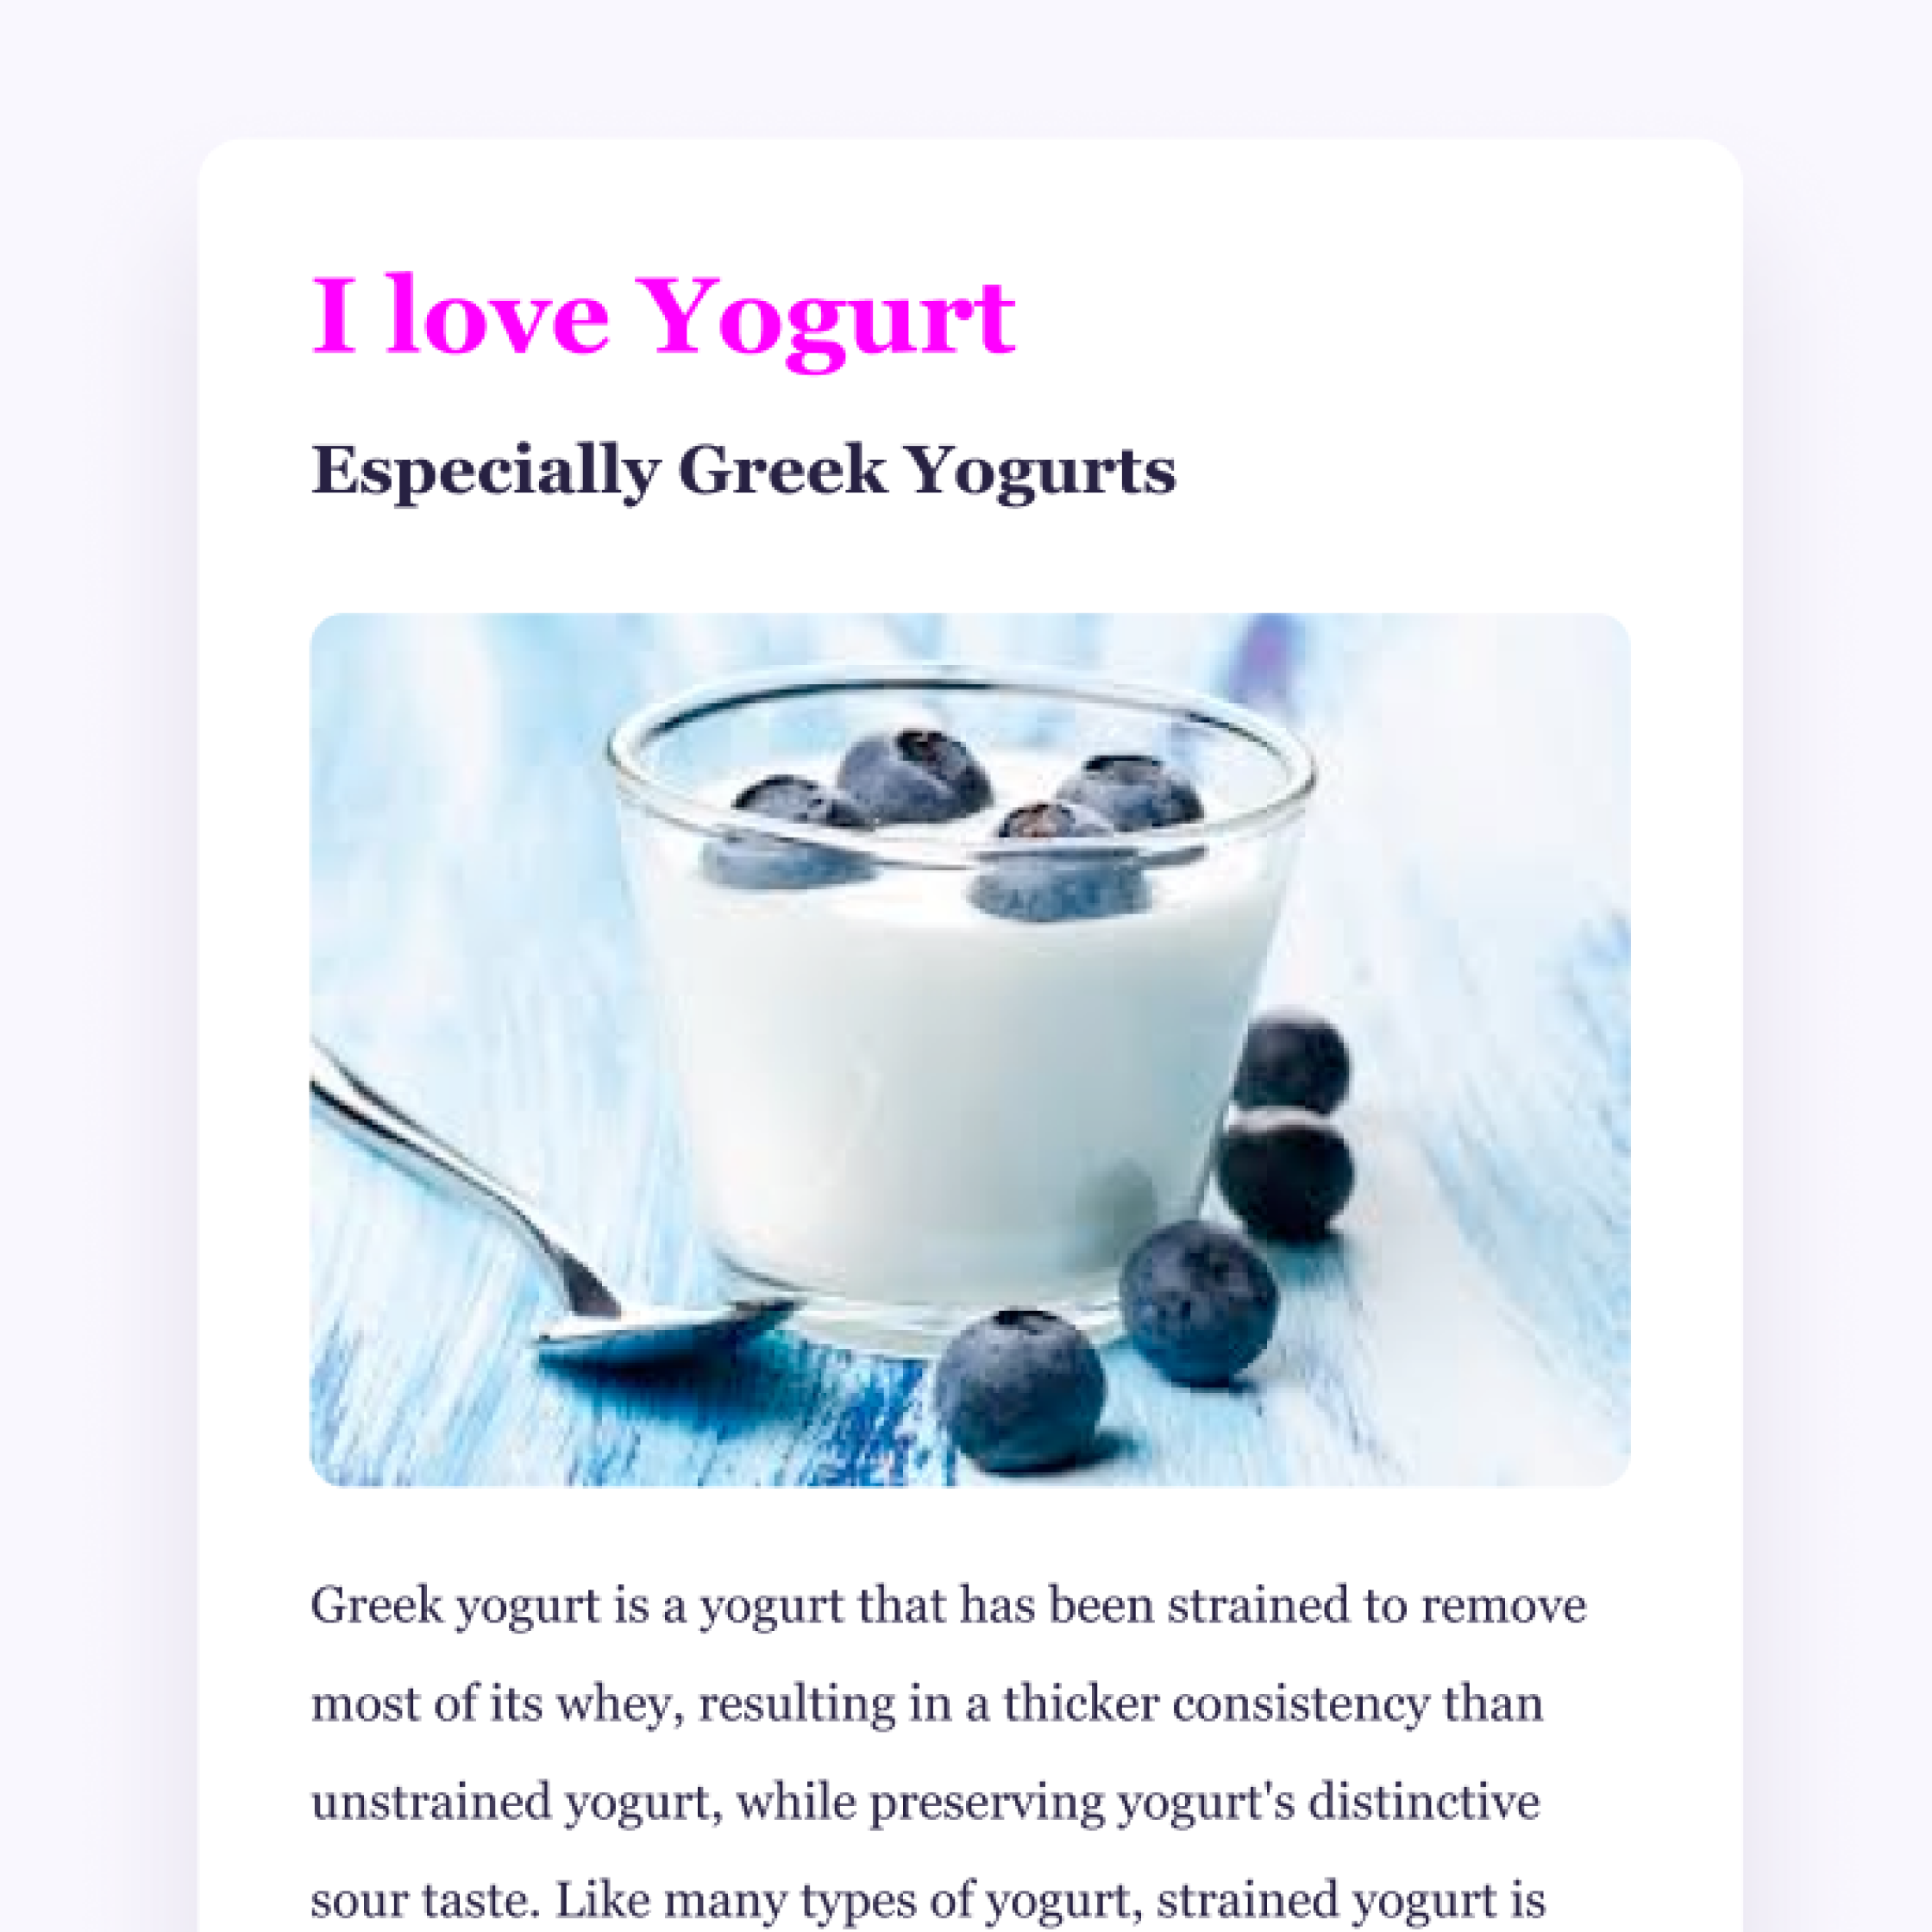 image of yogurt with berries